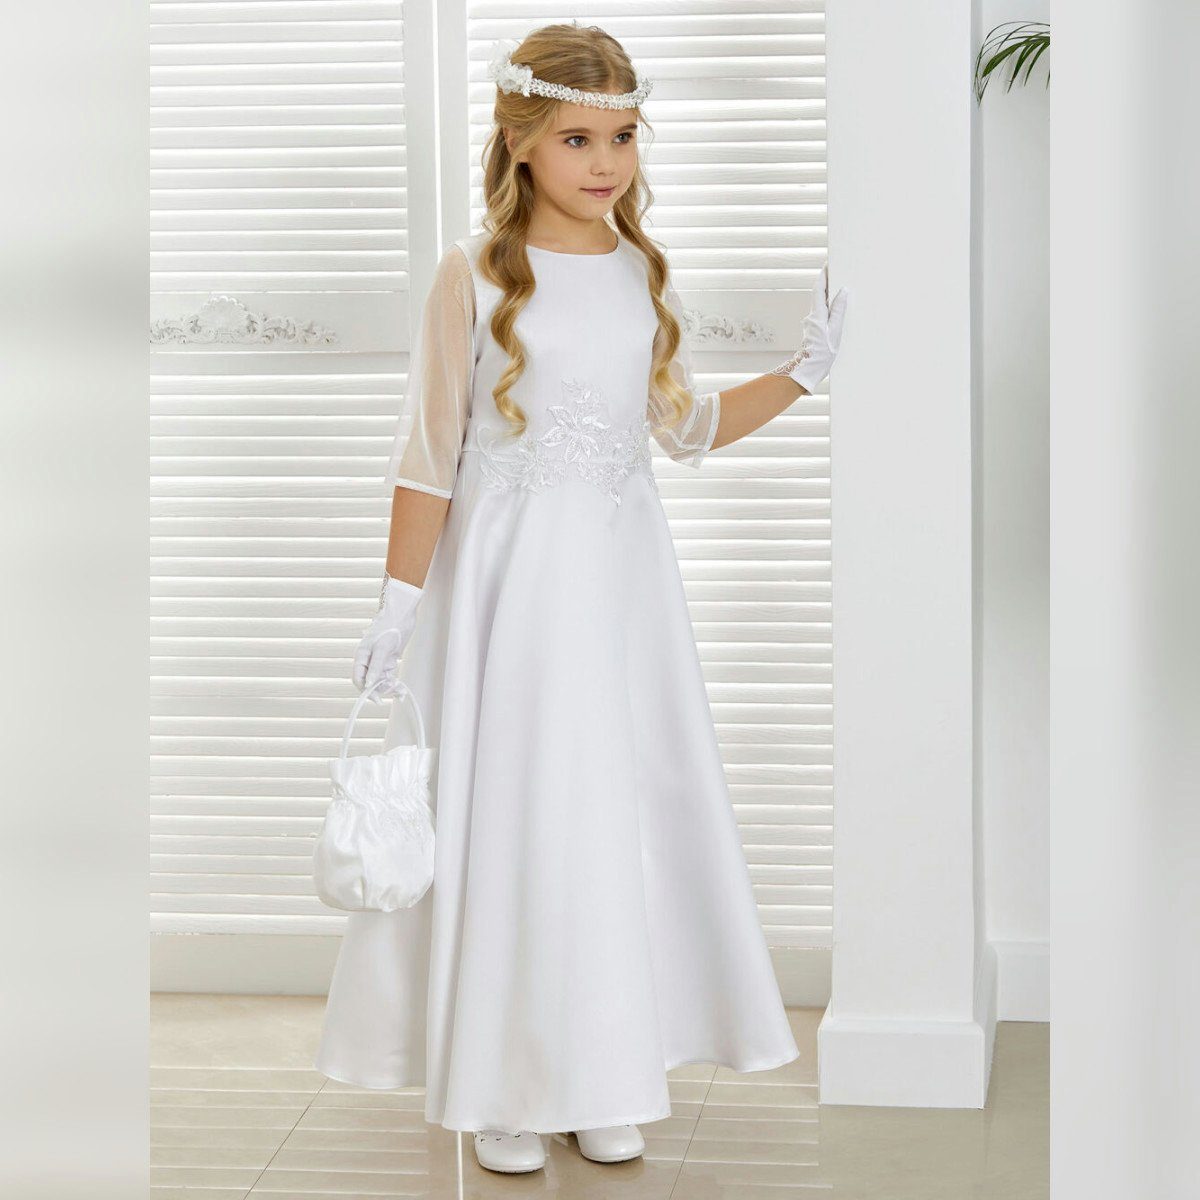 Dalary Dalary Kommunionkleid Blumenmädchenkleid DK-305 Weiß Partykleid